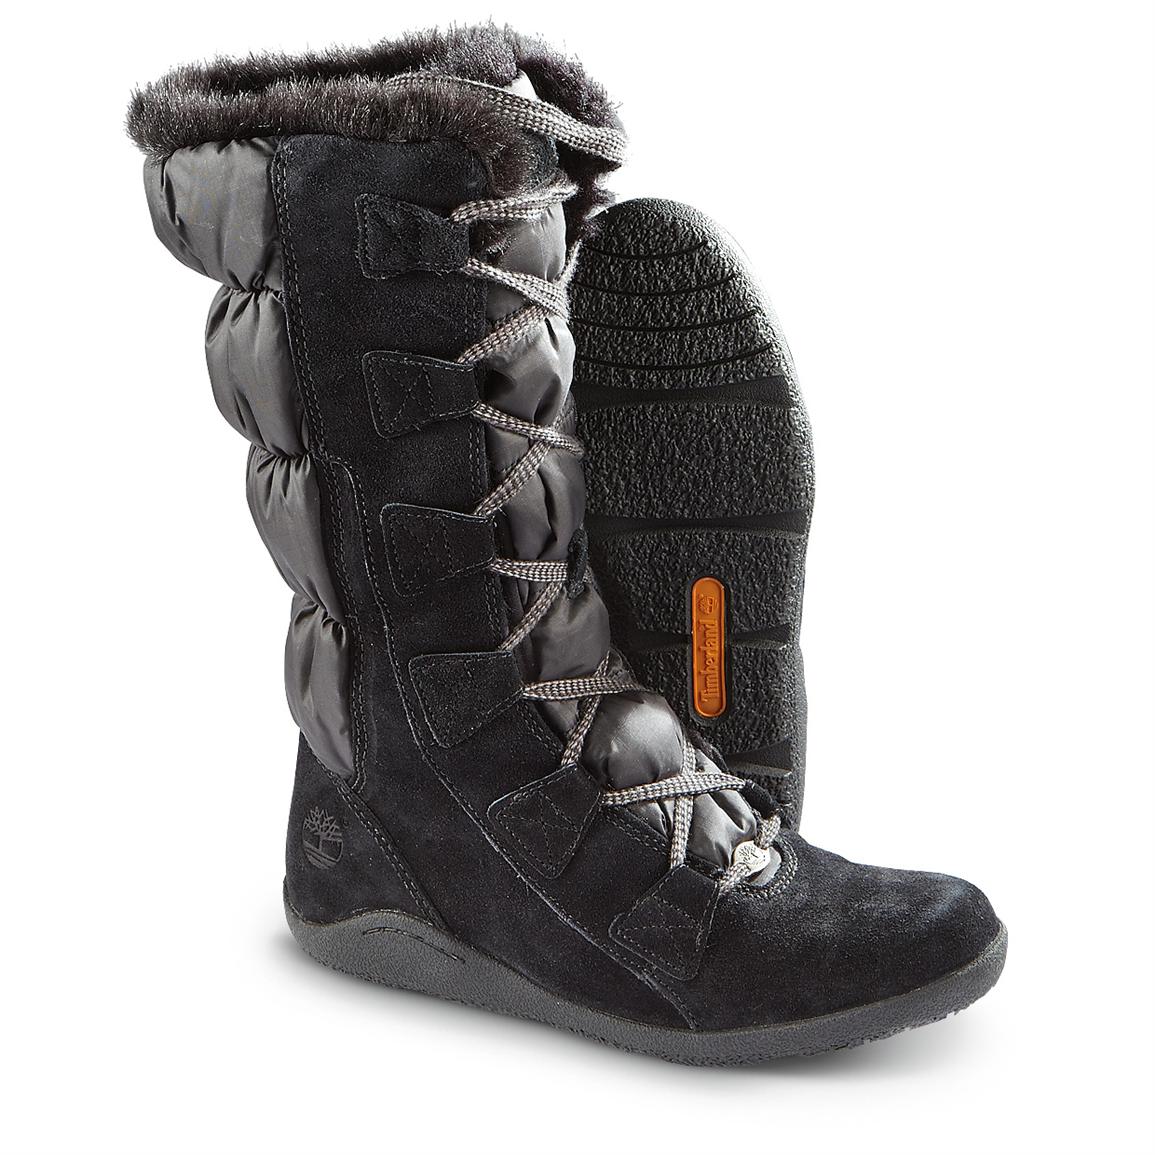 Black Snow Boots Women - Yu Boots